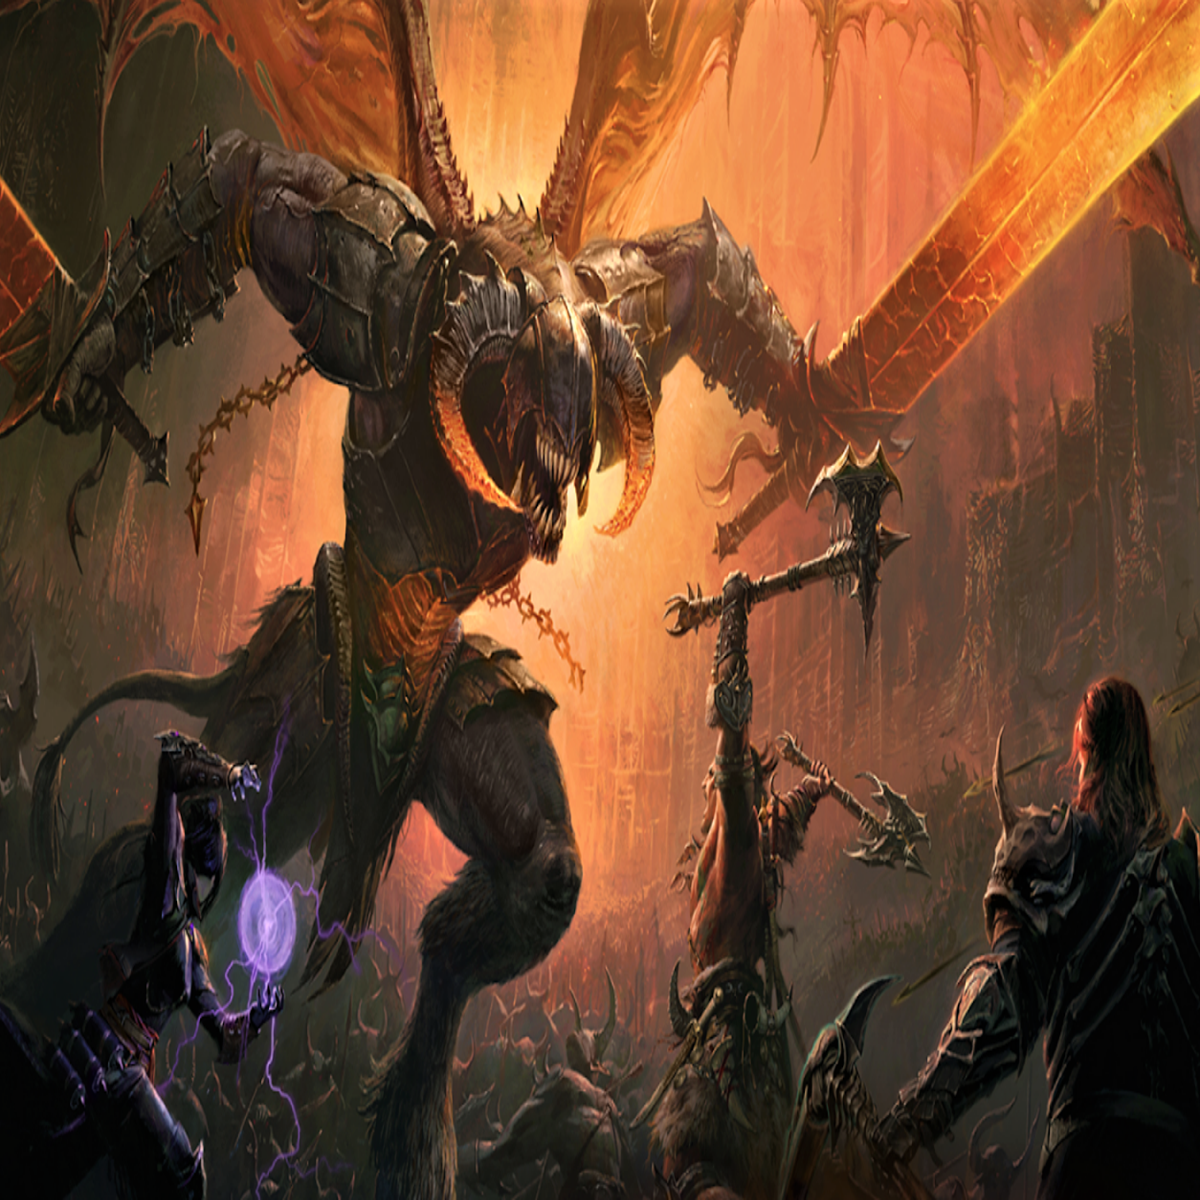 Diablo Immortal Hands-on Review: Fun Because It's Diablo